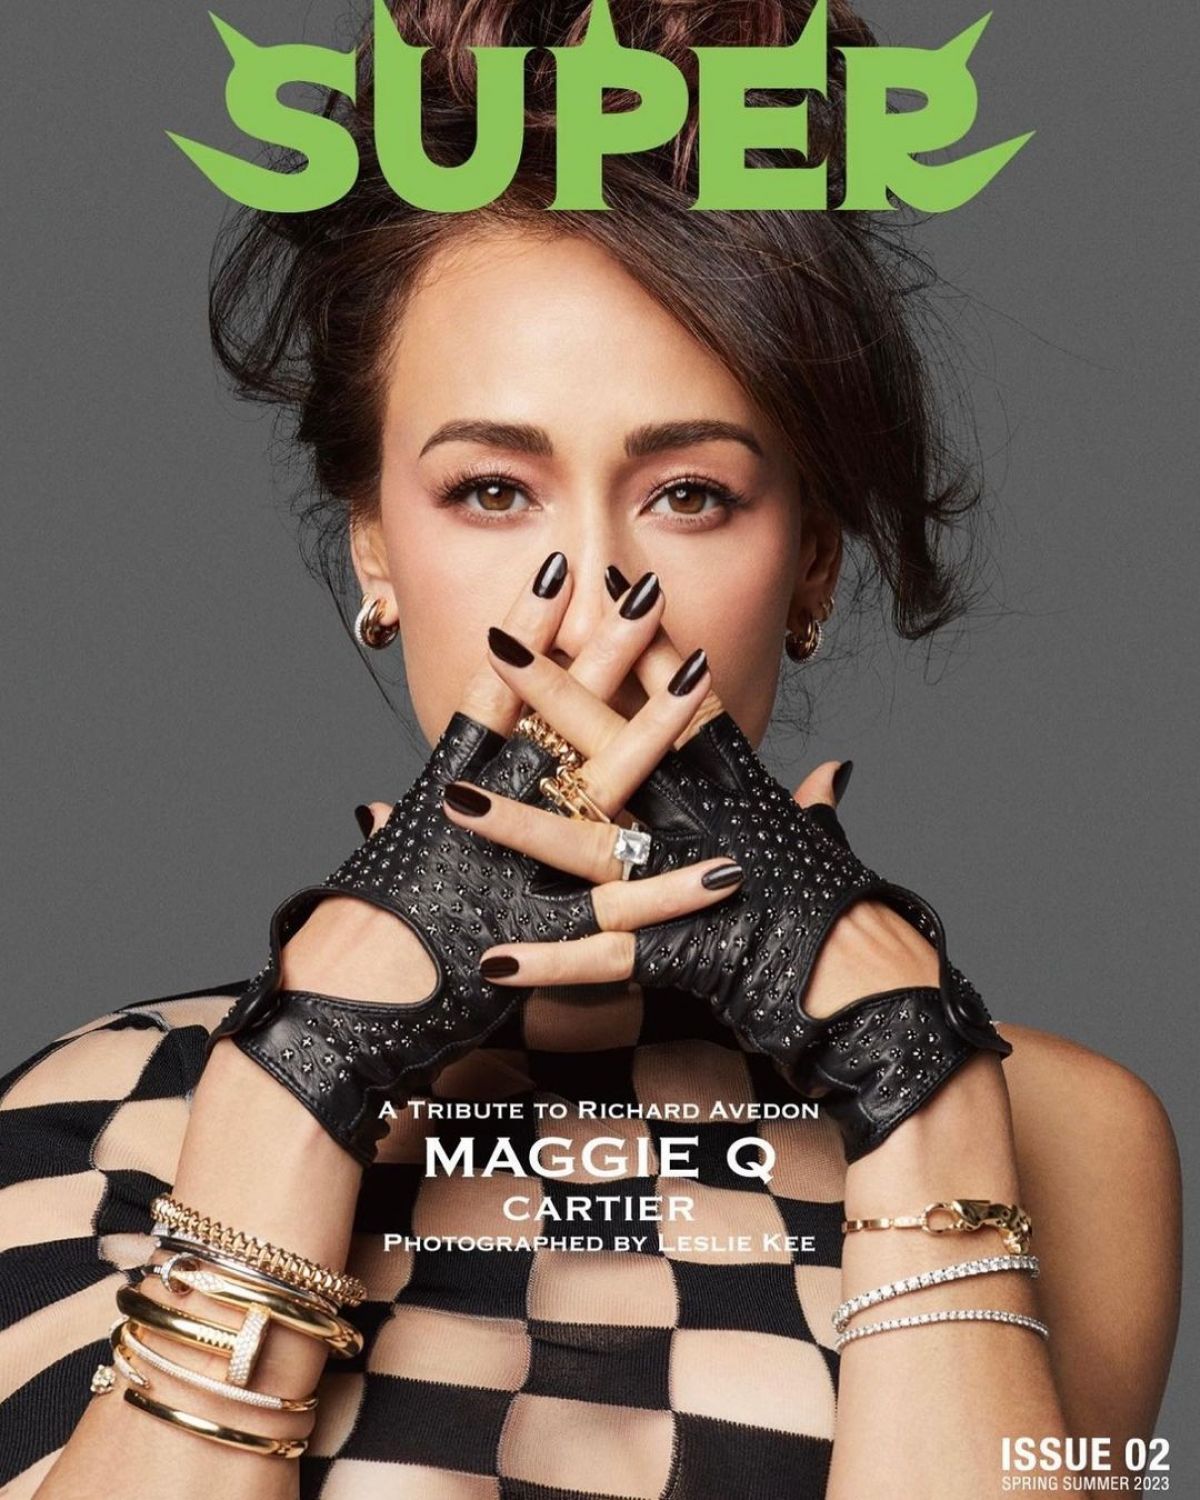 Maggie Style. Super magazine